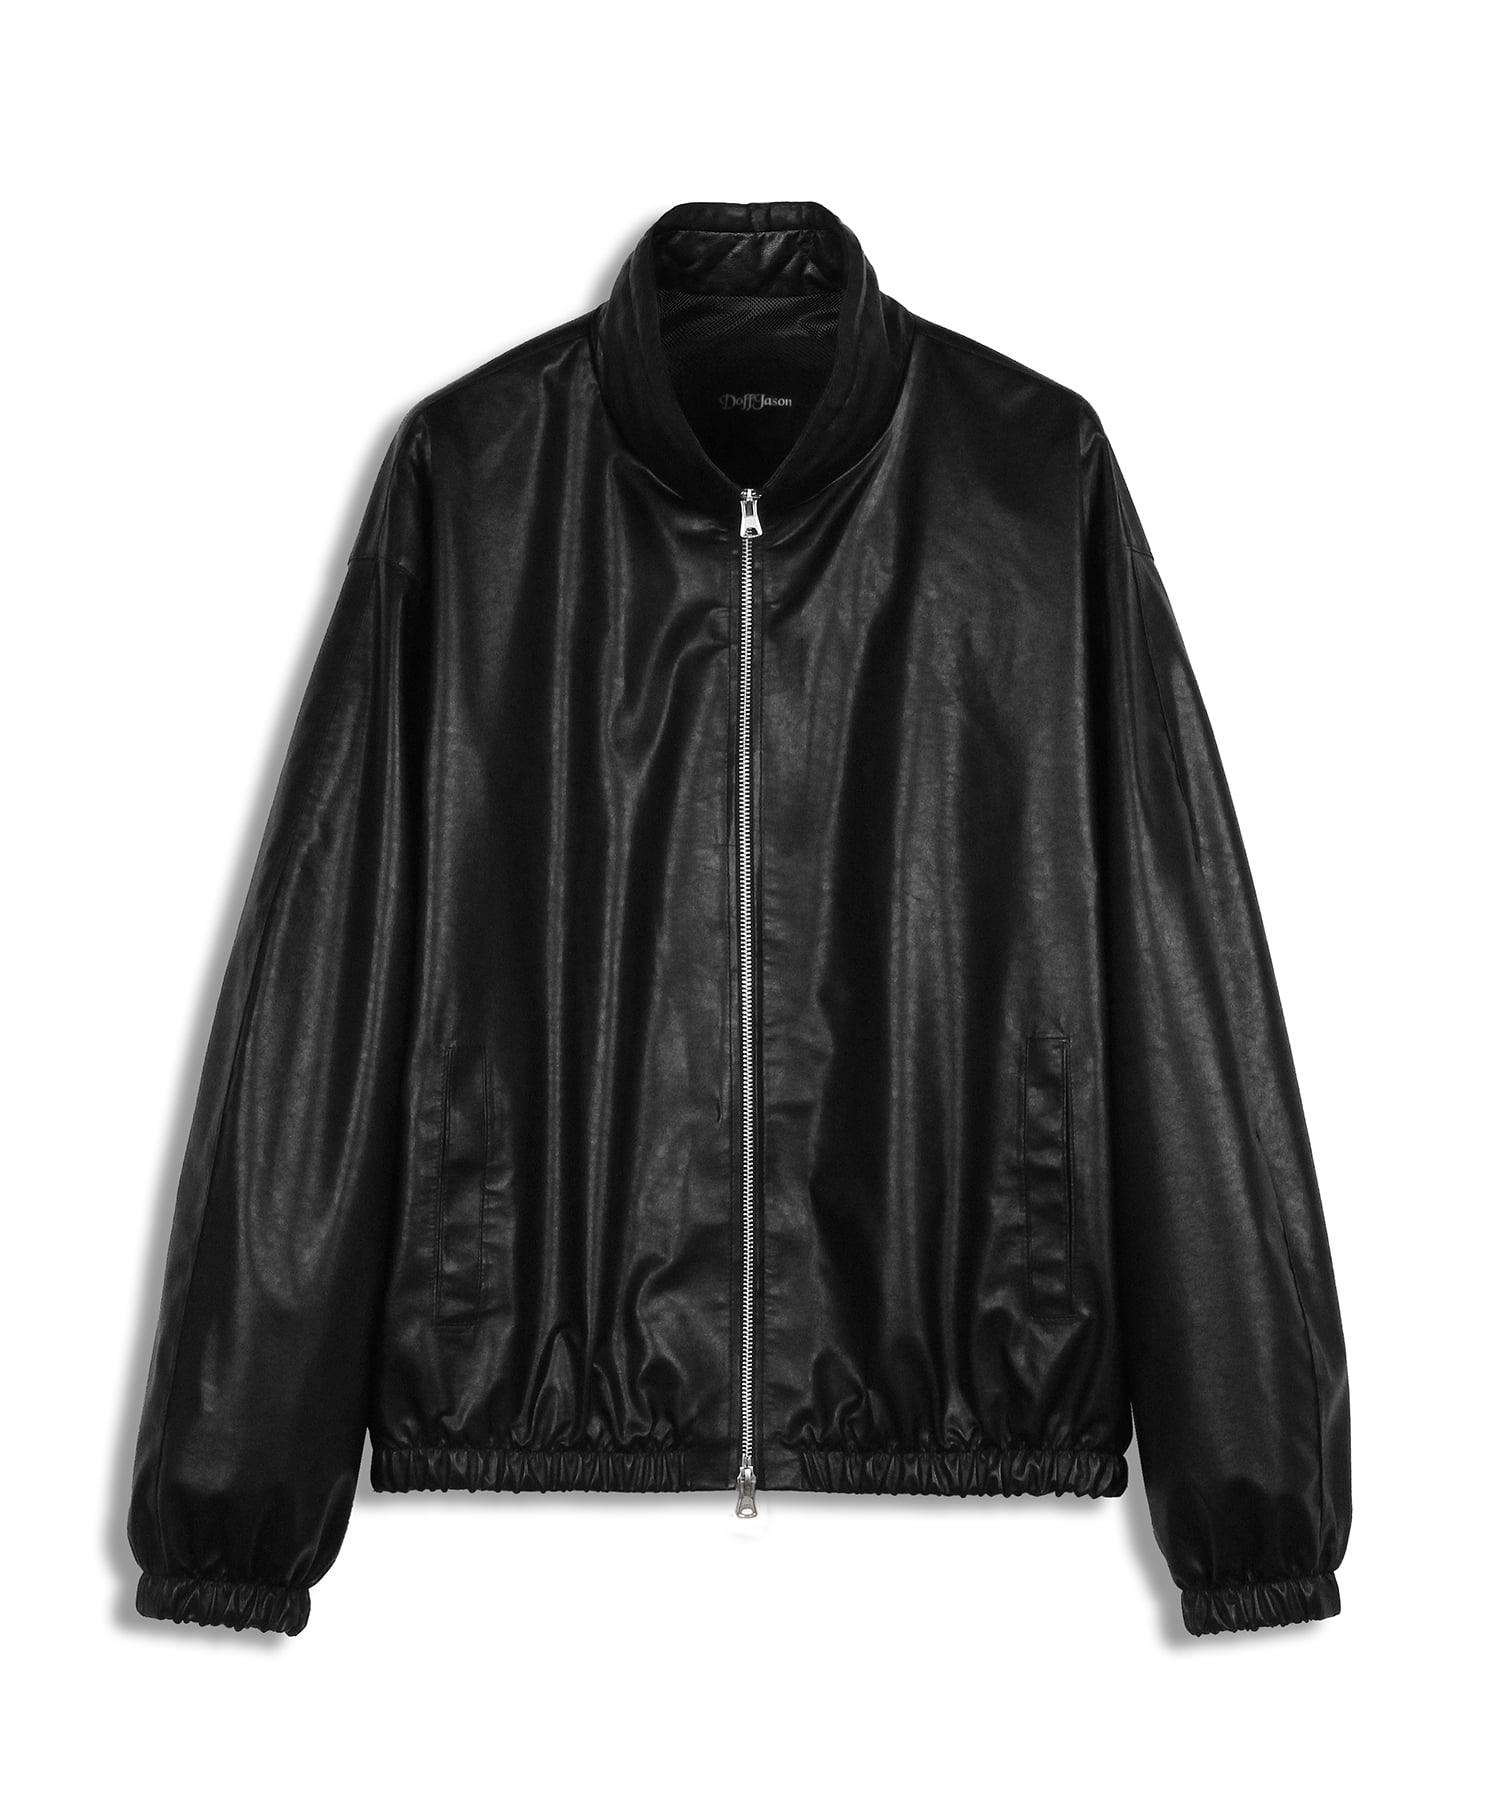 Overfit vegan leather windbreaker jacket (black)